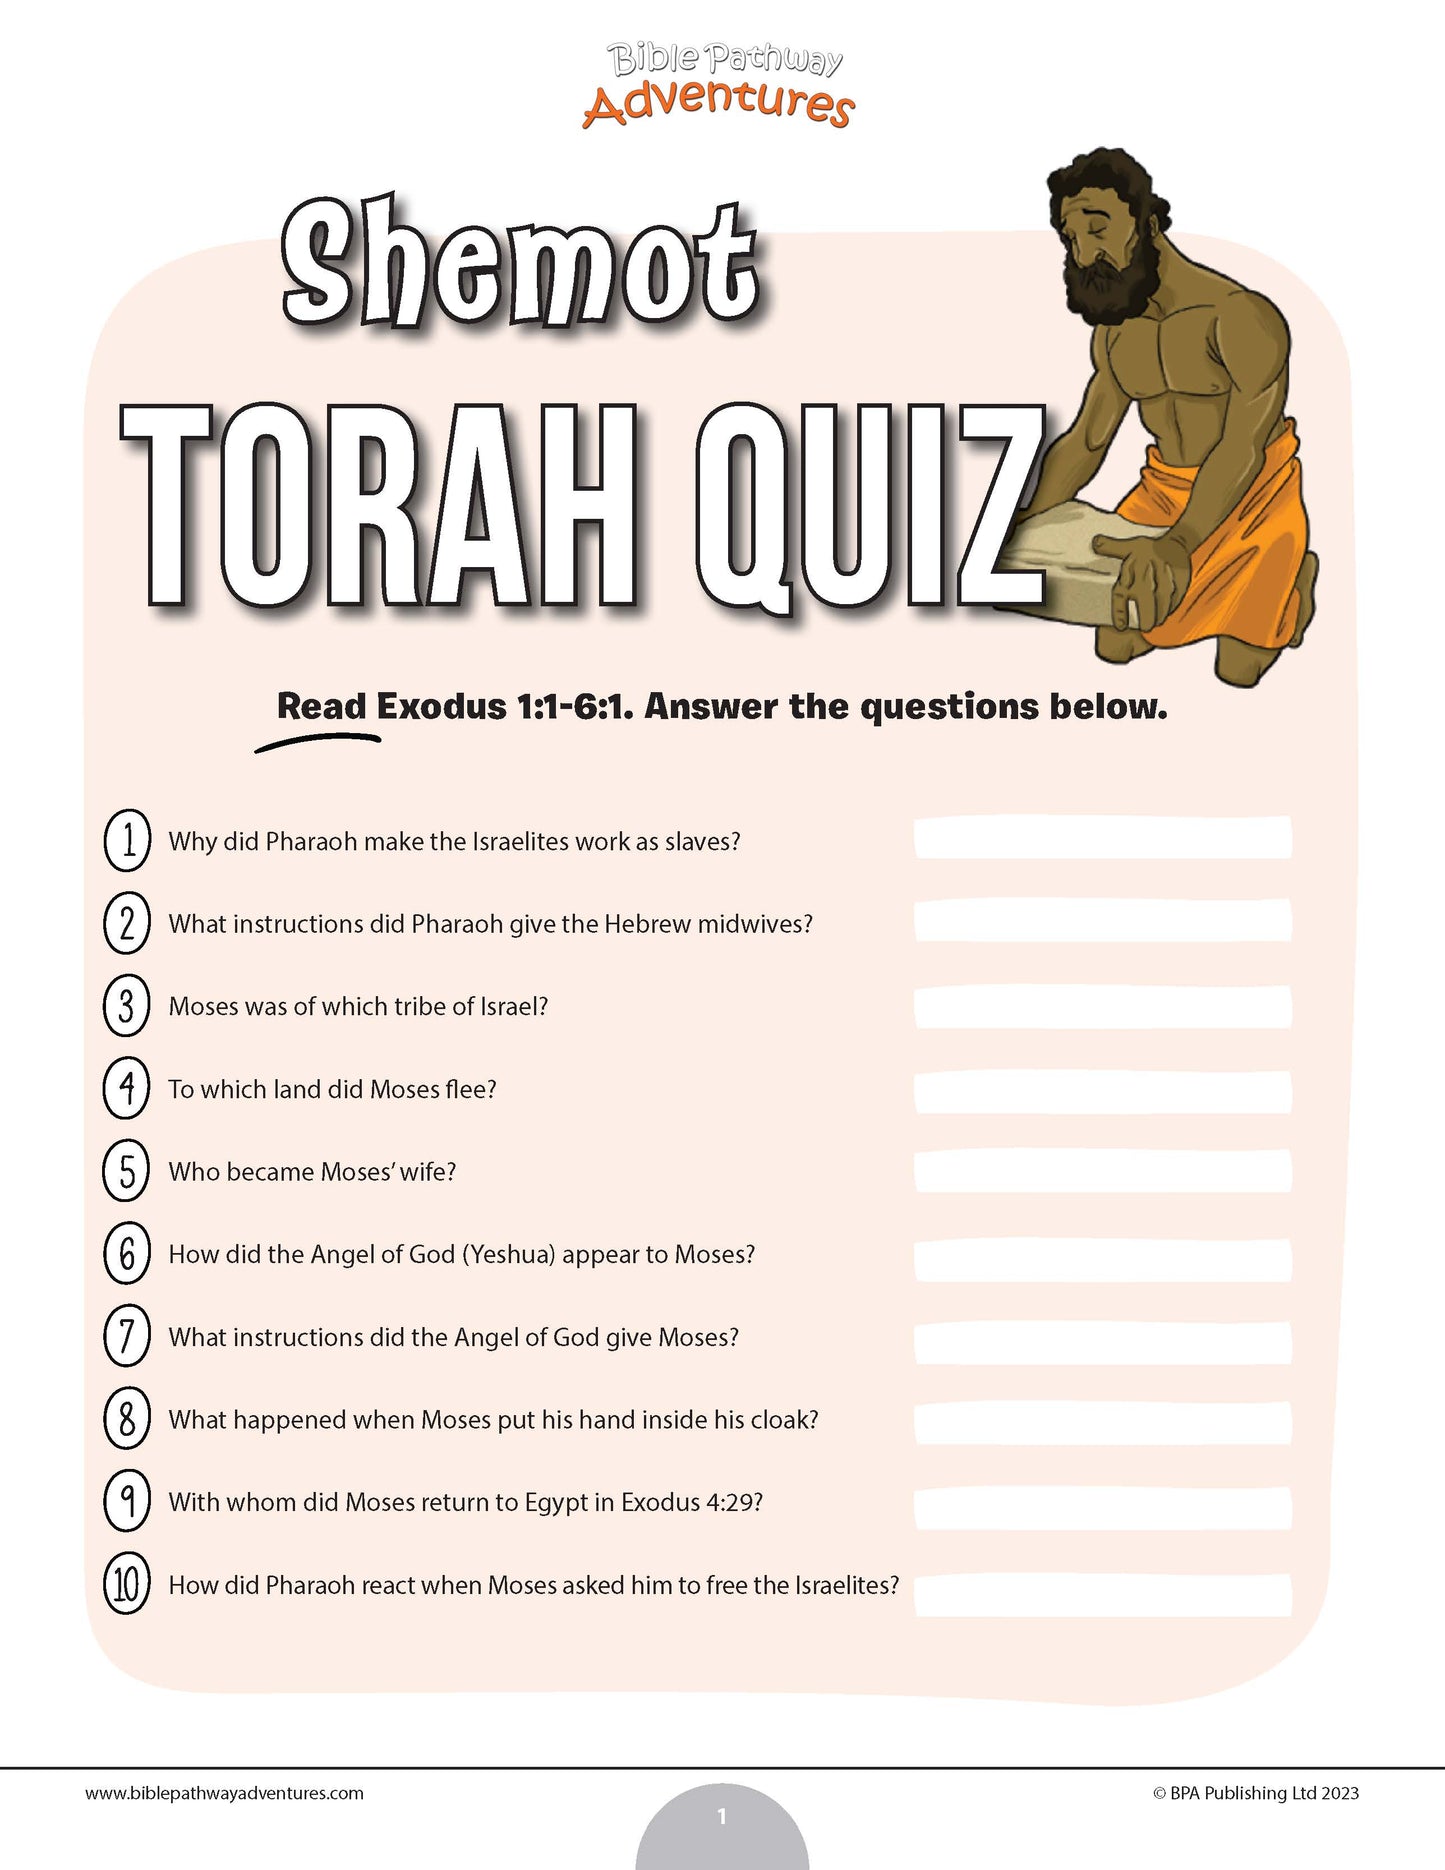 Cuestionario Shemot Torá